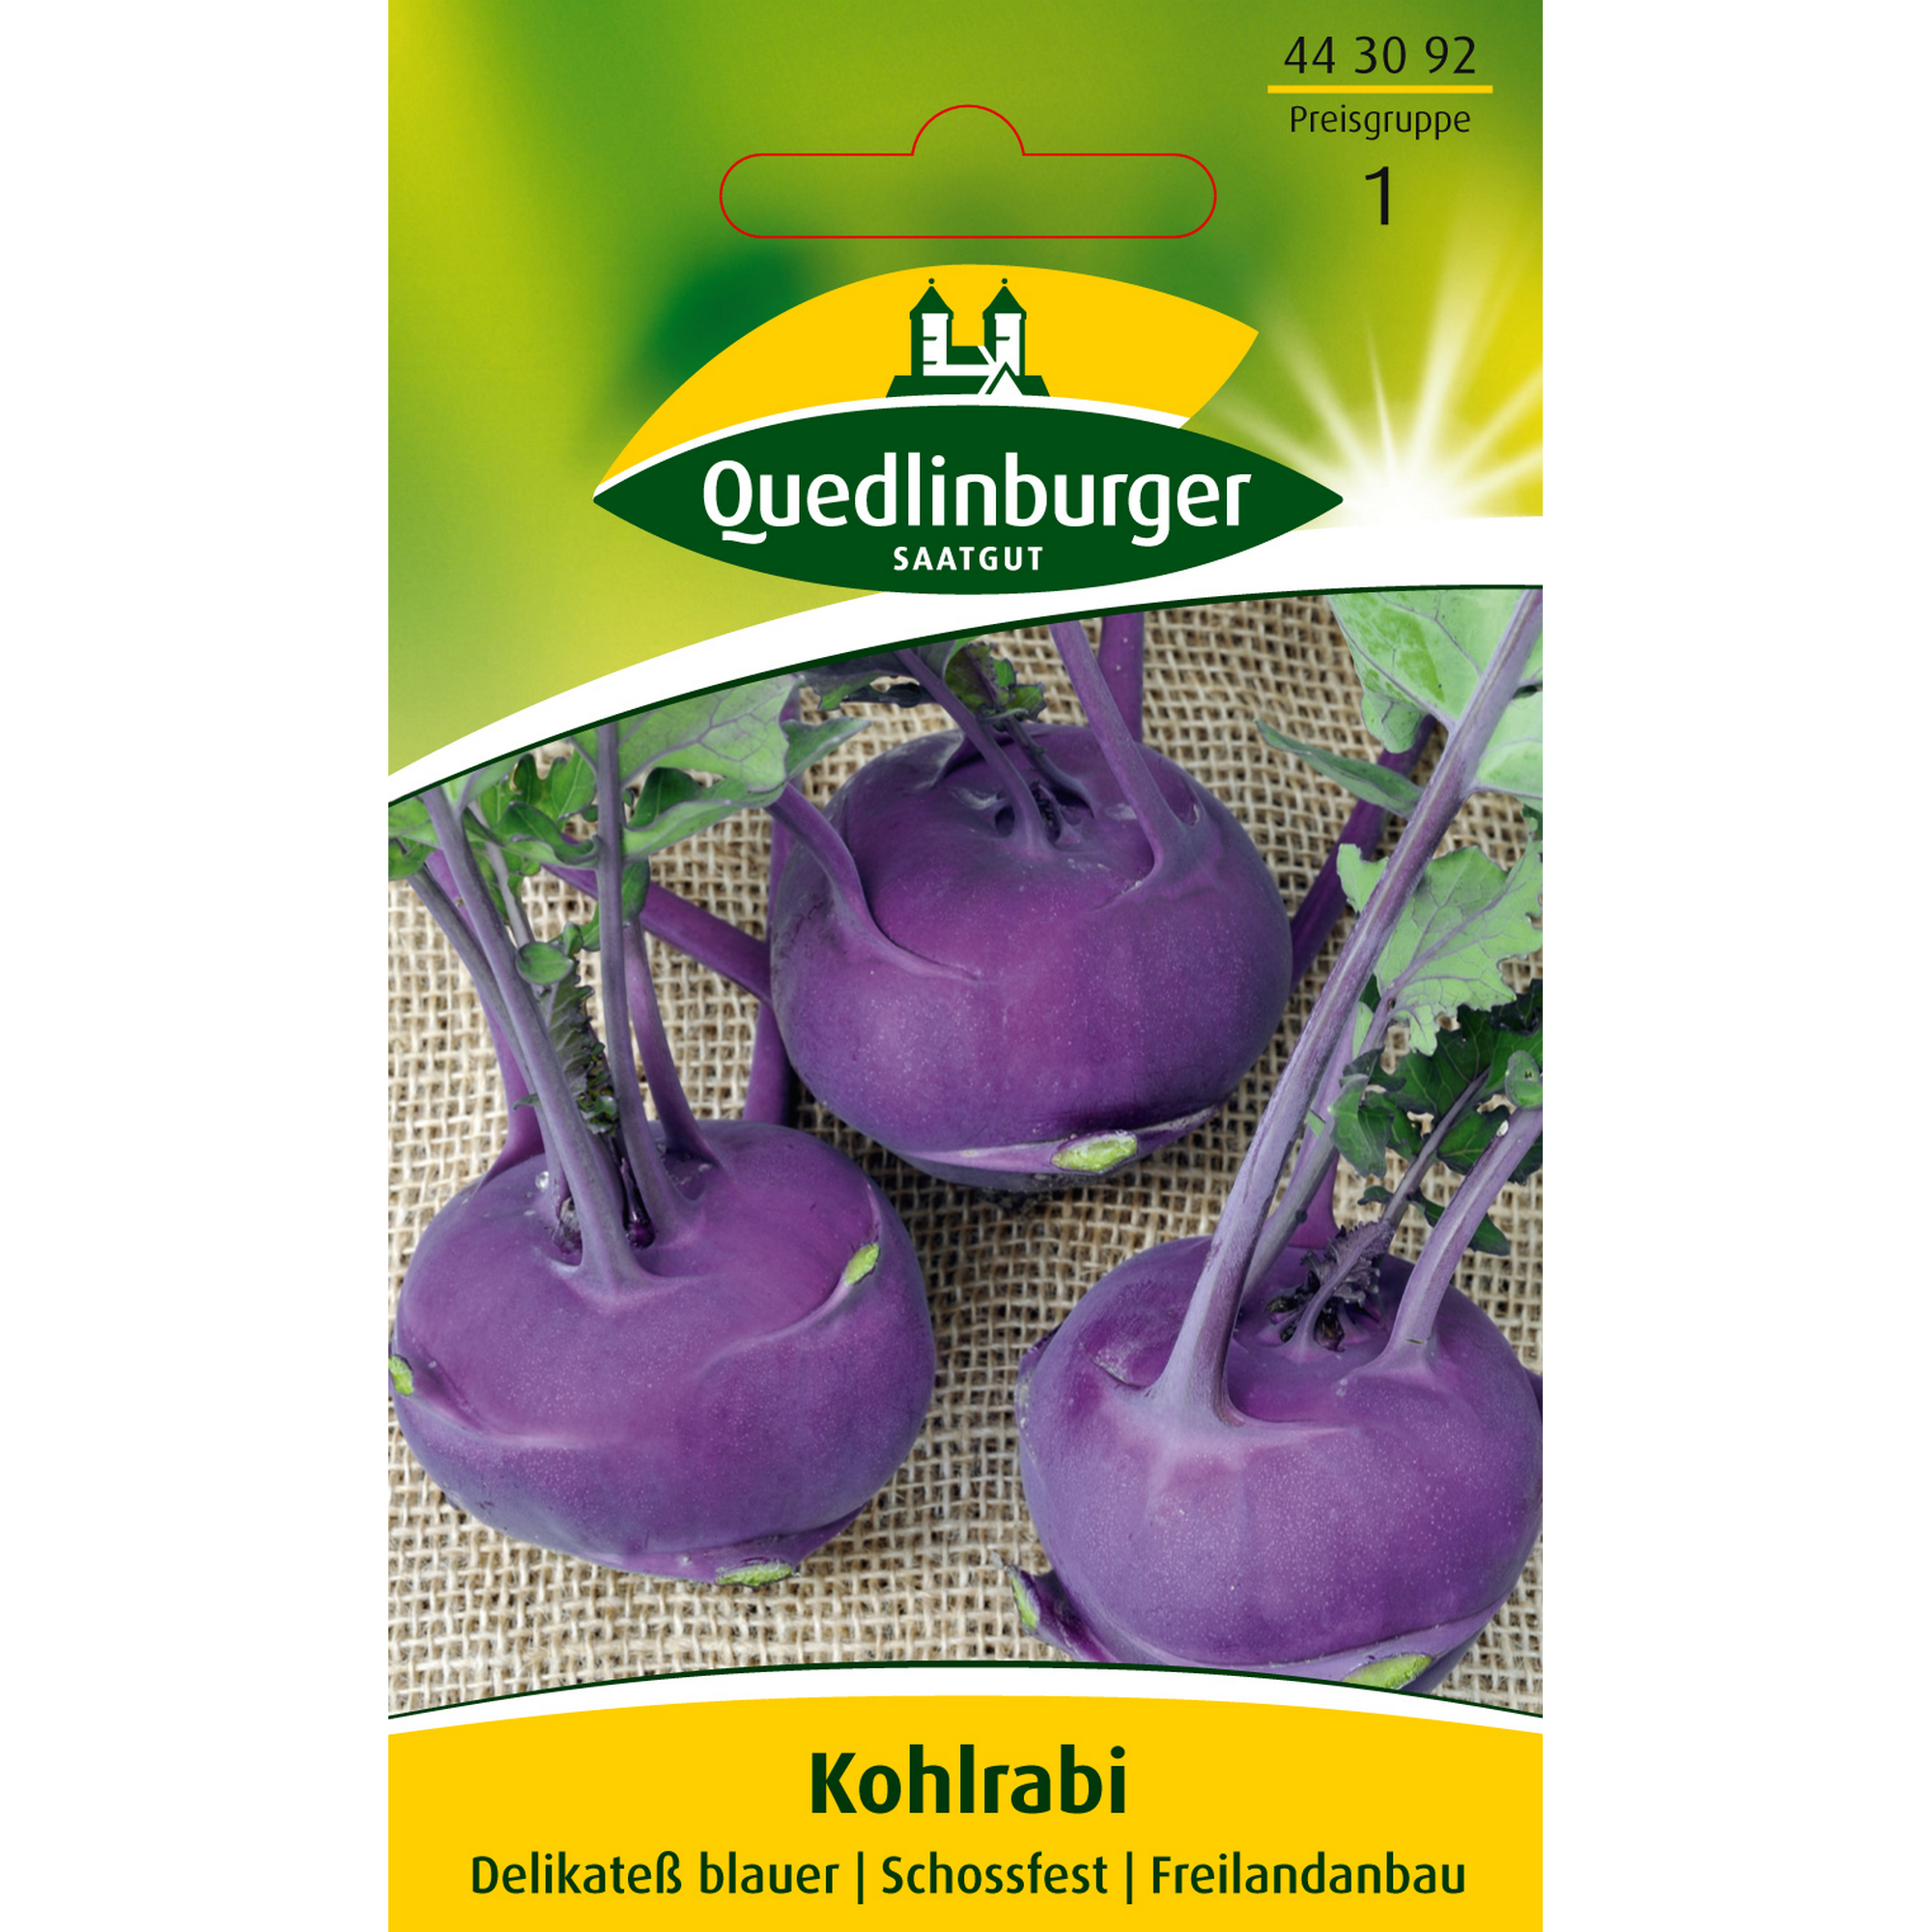 Kohlrabi 'Delikateß blauer' + product picture